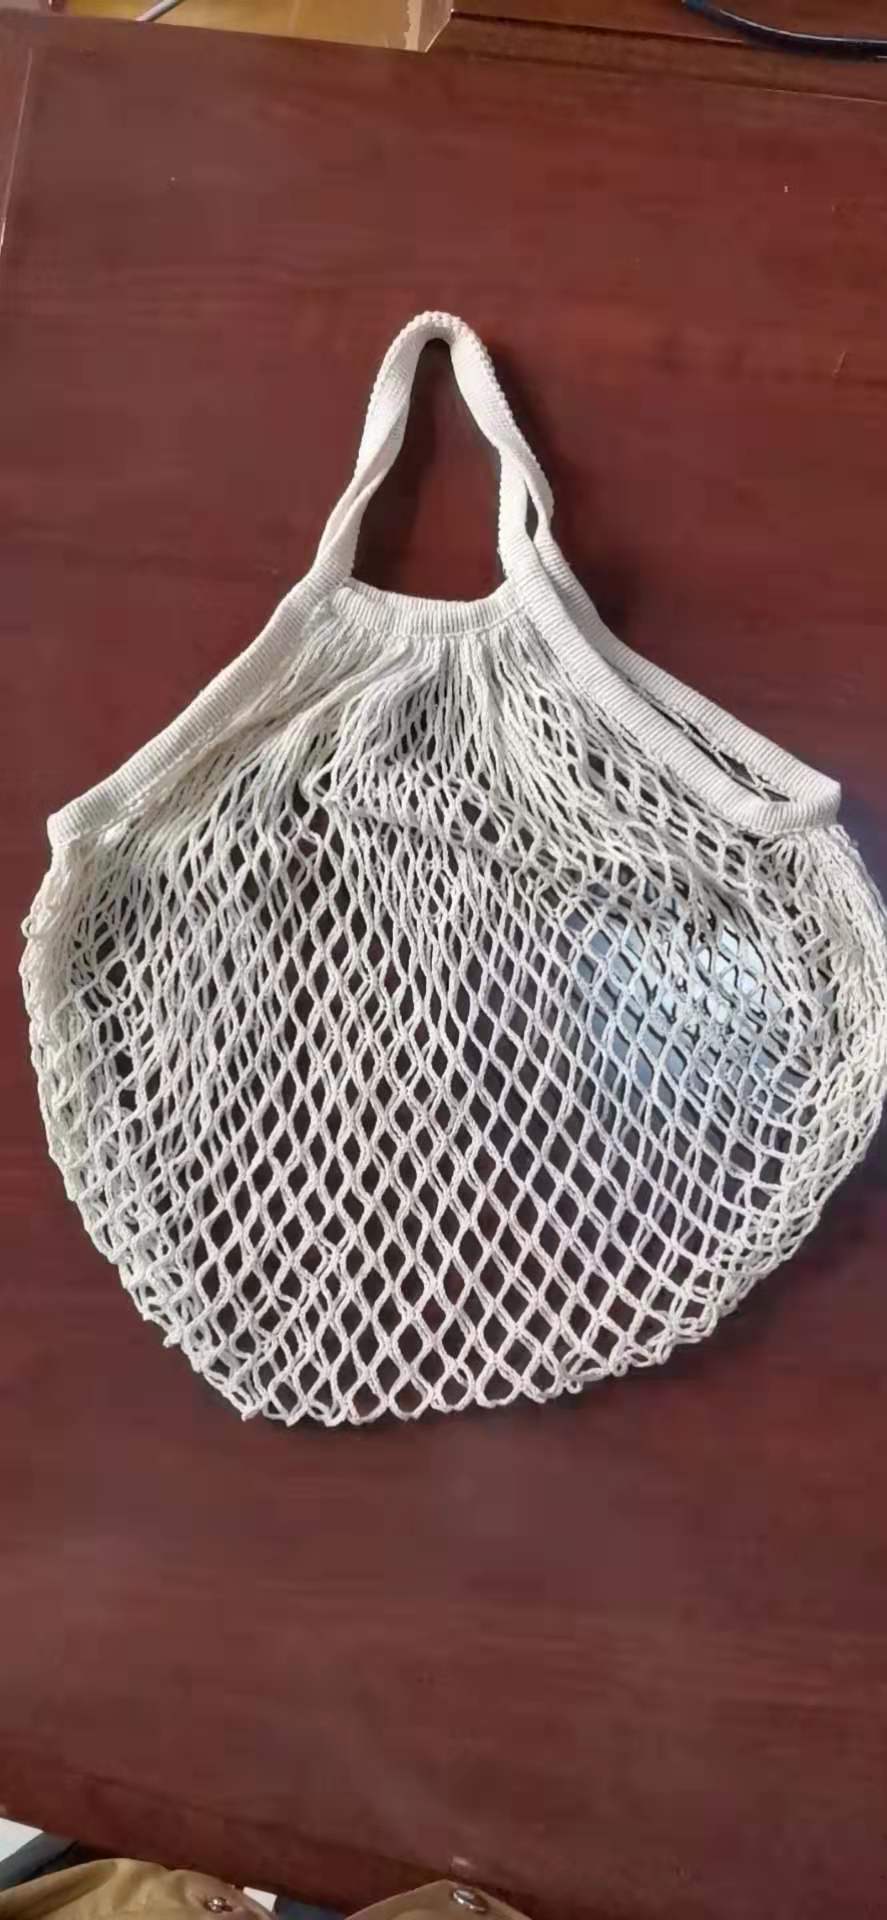 cotton net bag in stock